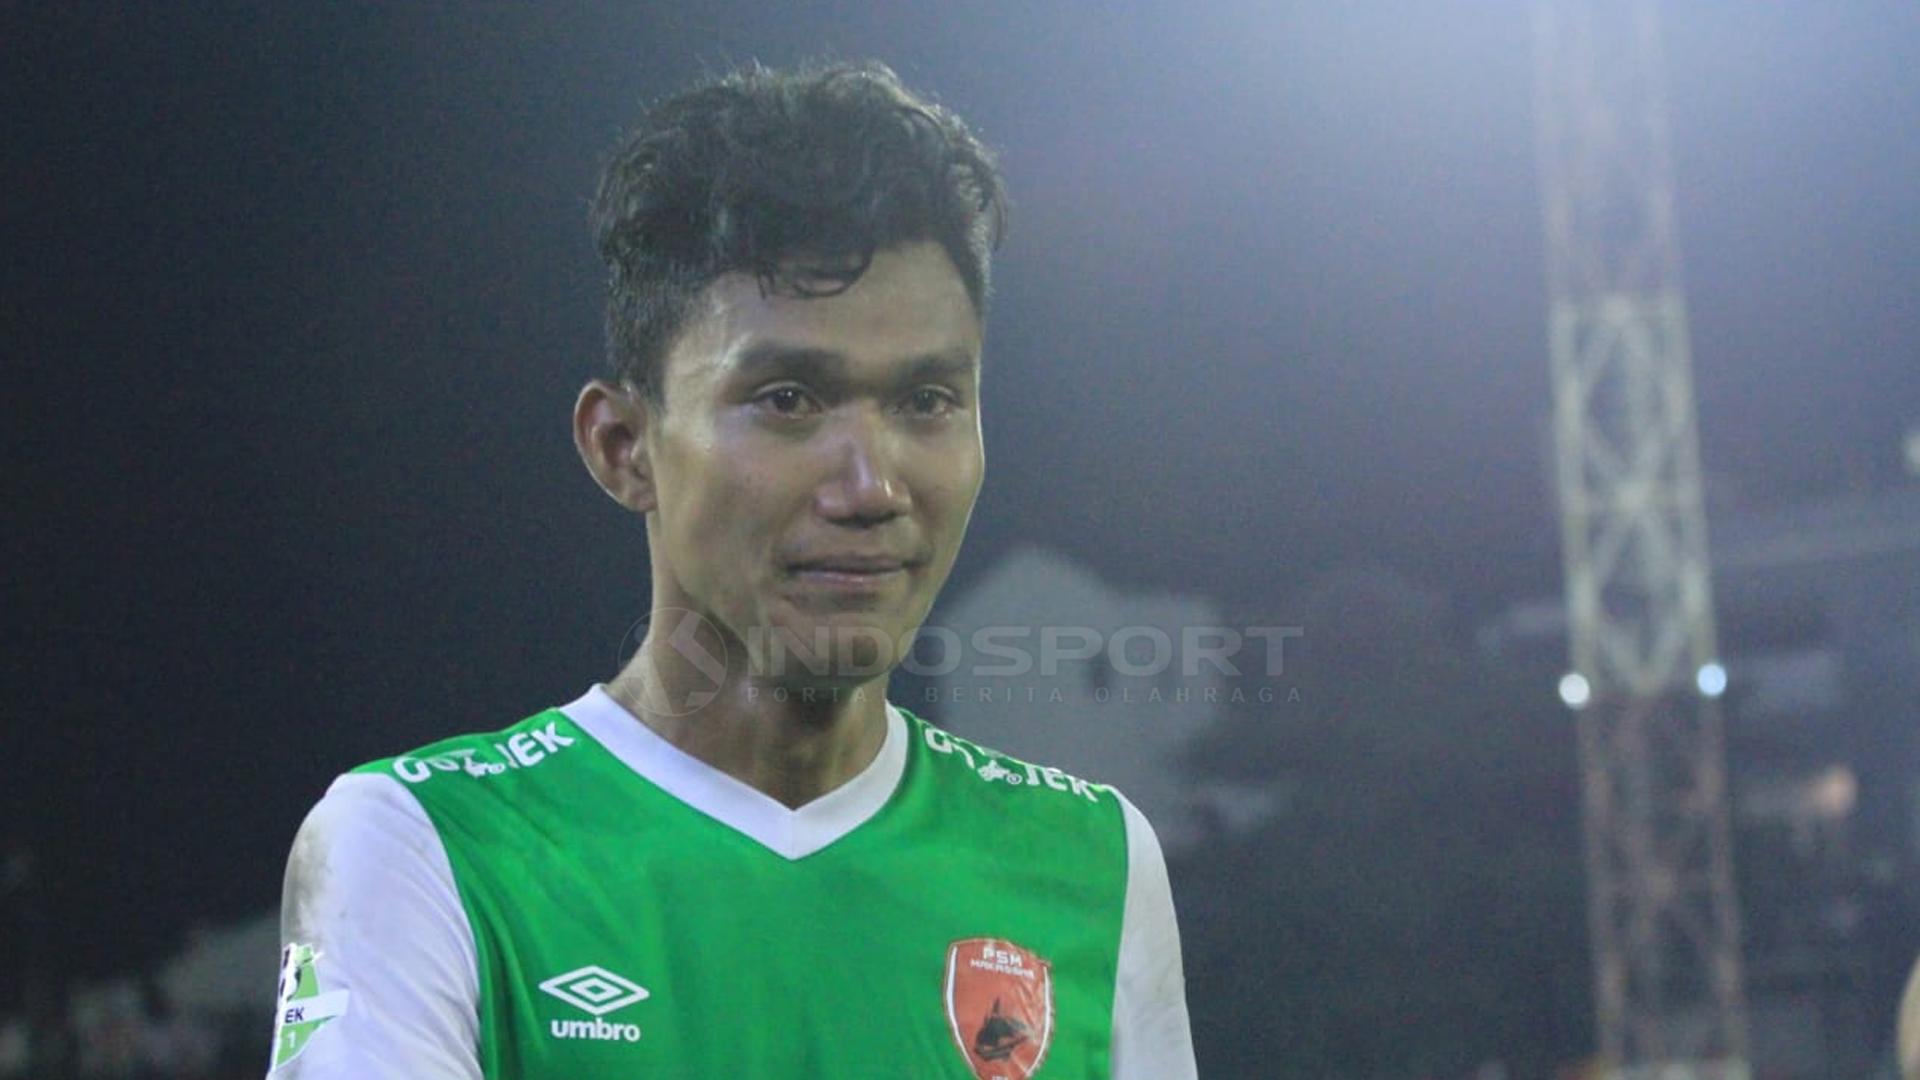 Kiper belia milik klub Liga 1 PSM Makassar, Hilmansyah, mengaku kalau dirinya lebih menyukai era kepelatihan Robert Alberts ketimbang Darije Kalezic. - INDOSPORT